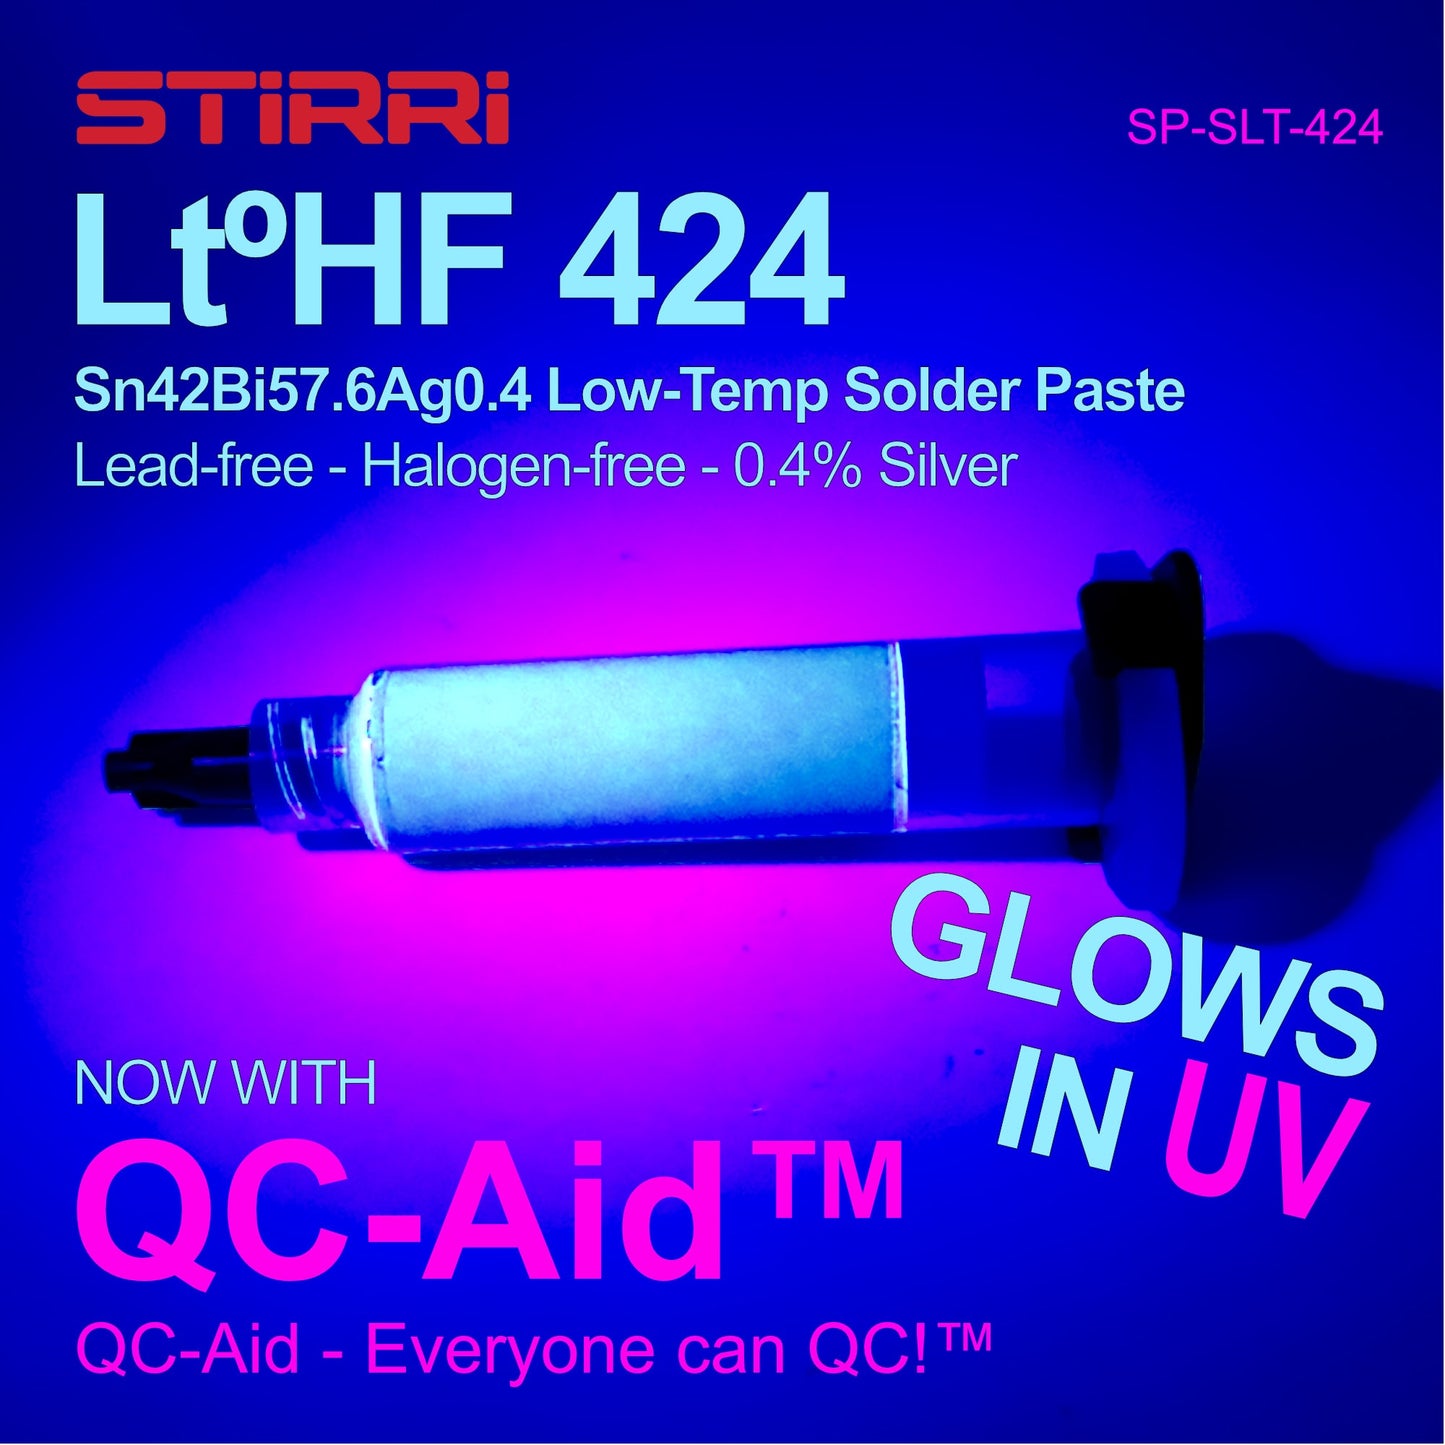 LT-HF-424 - Sn42Bi57.6Ag0.4 low-temperature solder paste lead-free halogen-free 0.4% silver rosin no-clean (ROL0)